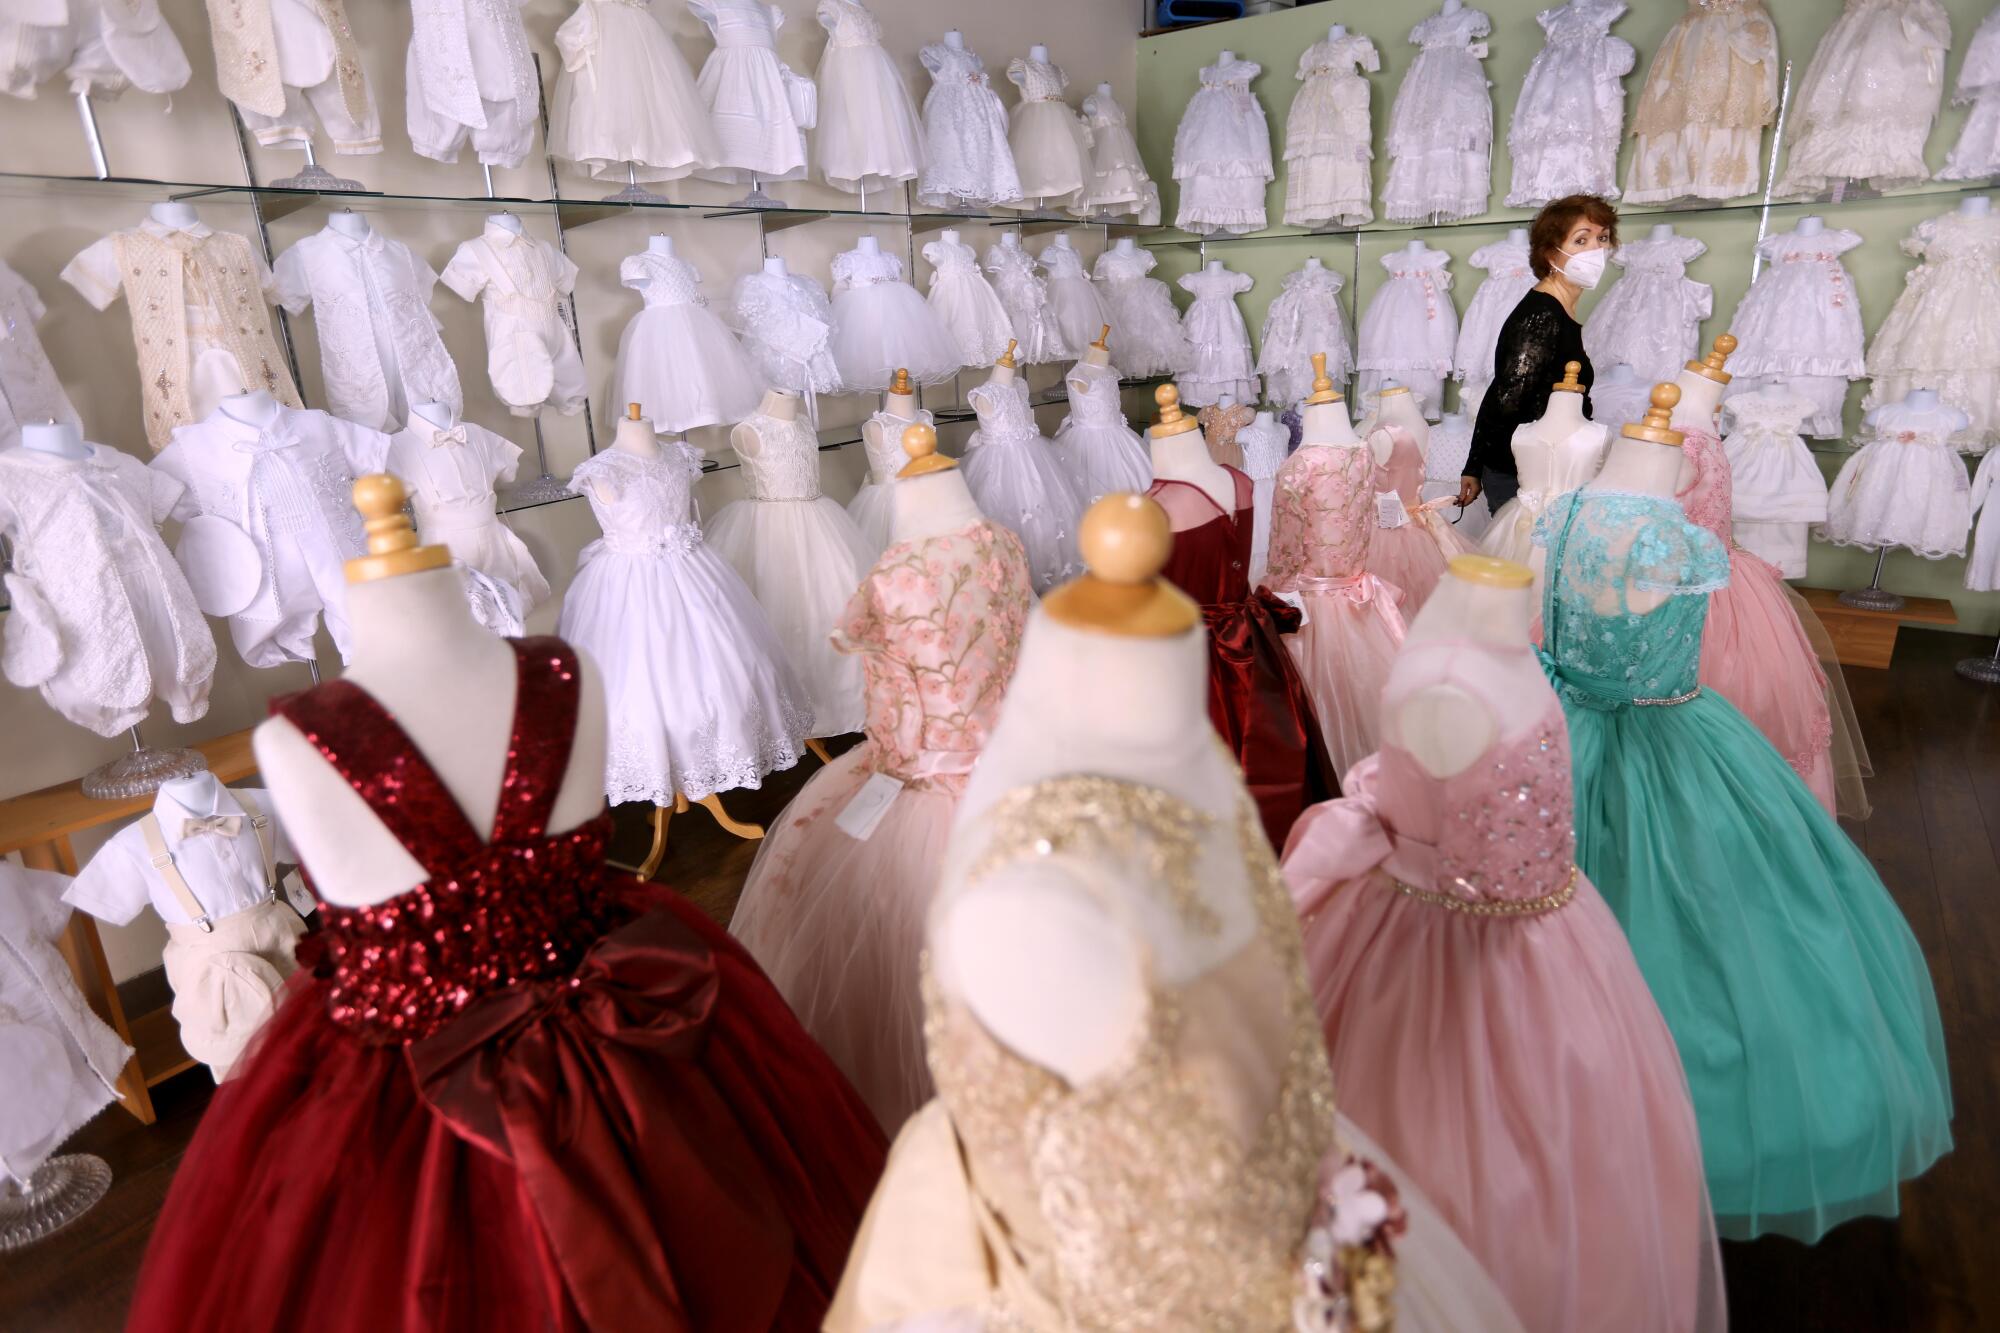 Dresses inside a store. 